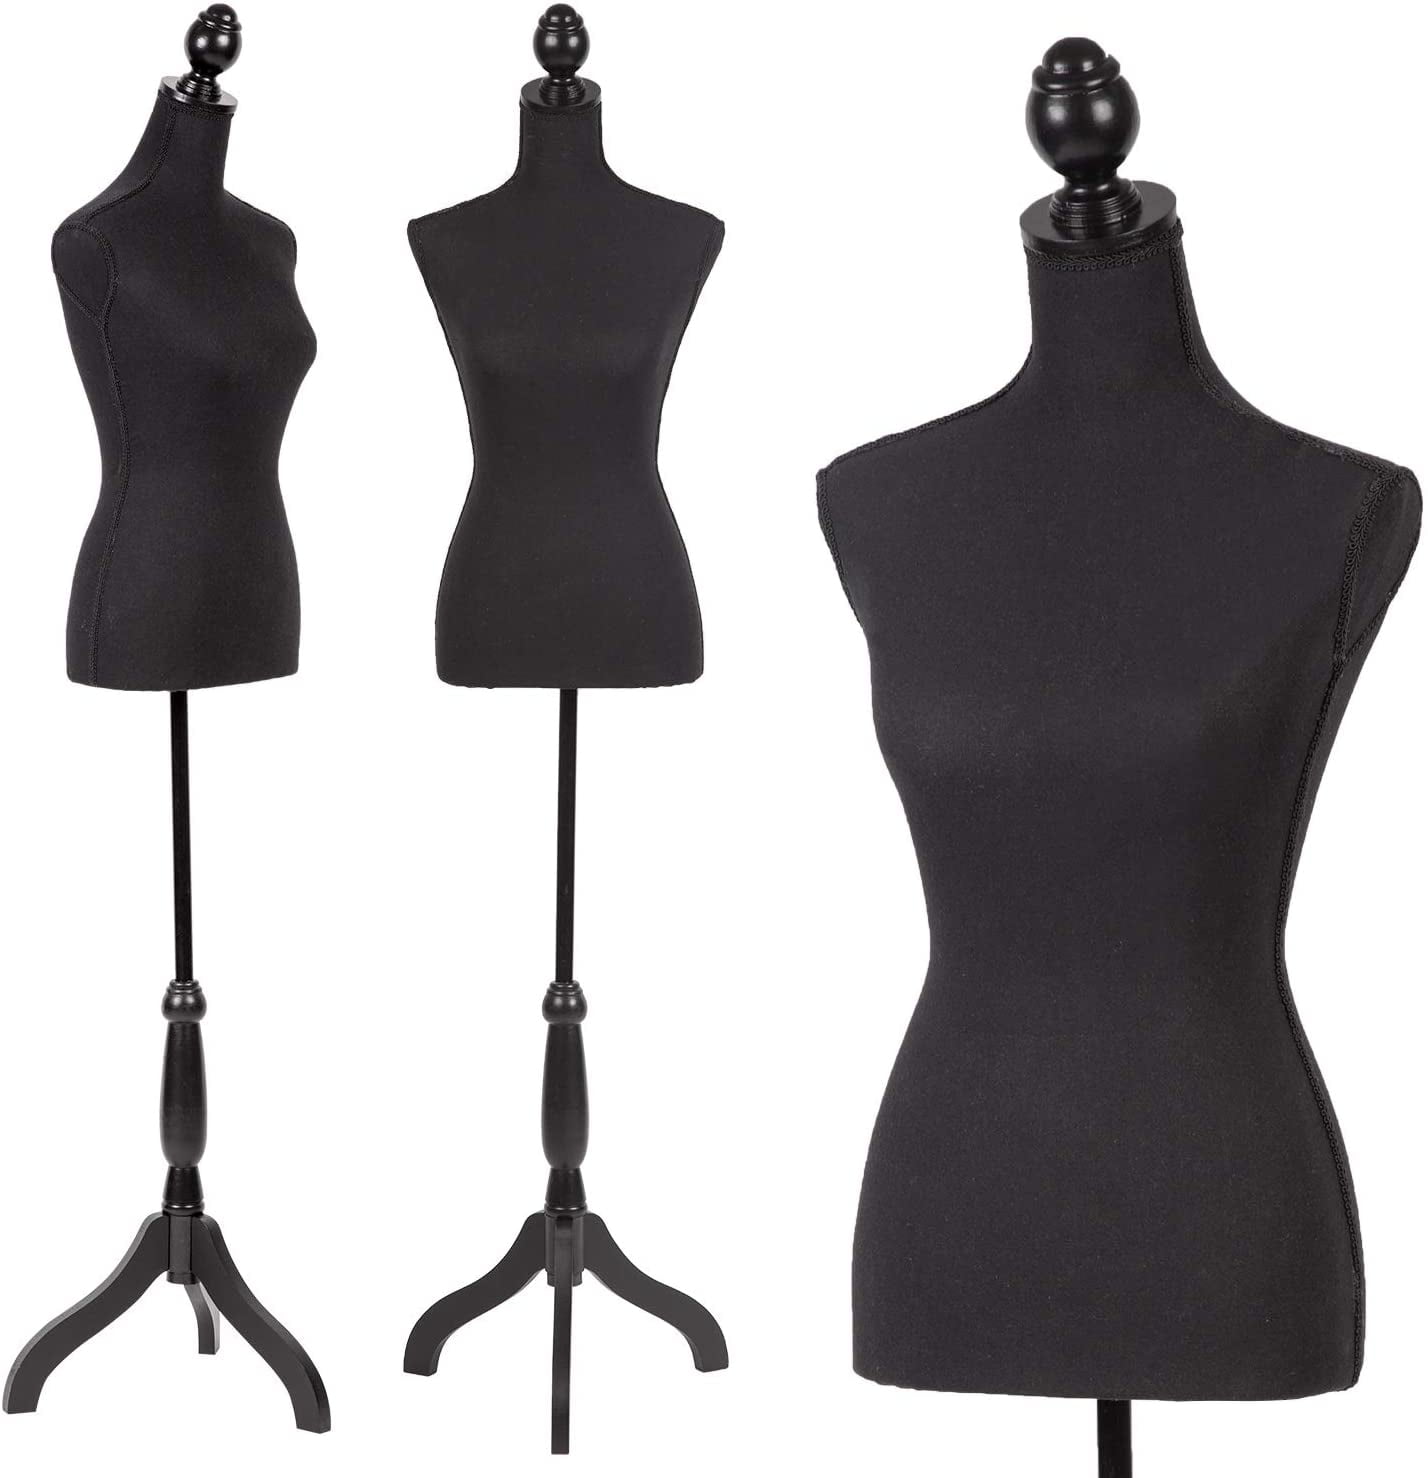 Beige Female Mannequin Torso Clothing Dress Display W/ Black Tripod Stand New 